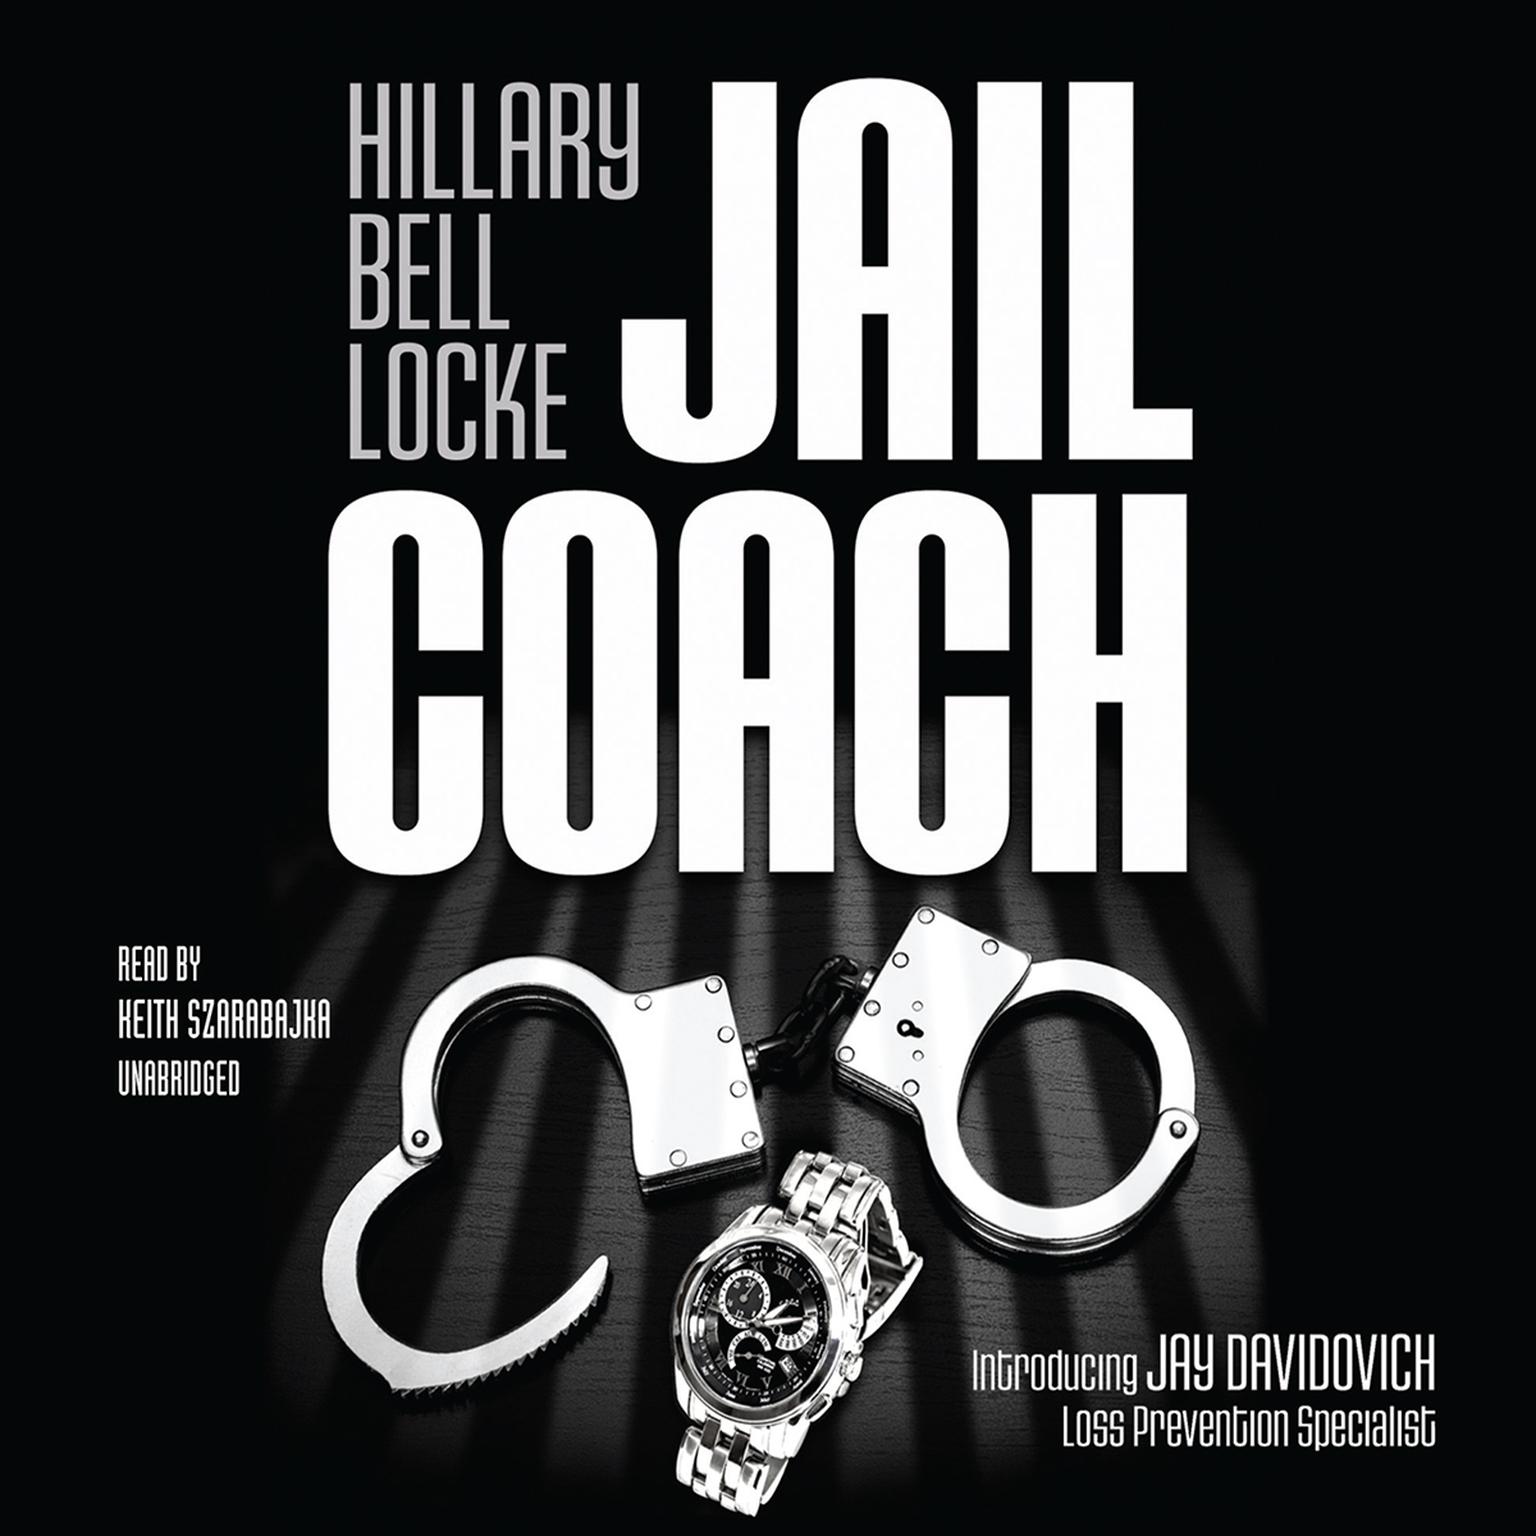 Jail Coach: The Jay Davidovich Mysteries Audiobook, by Hillary Bell Locke